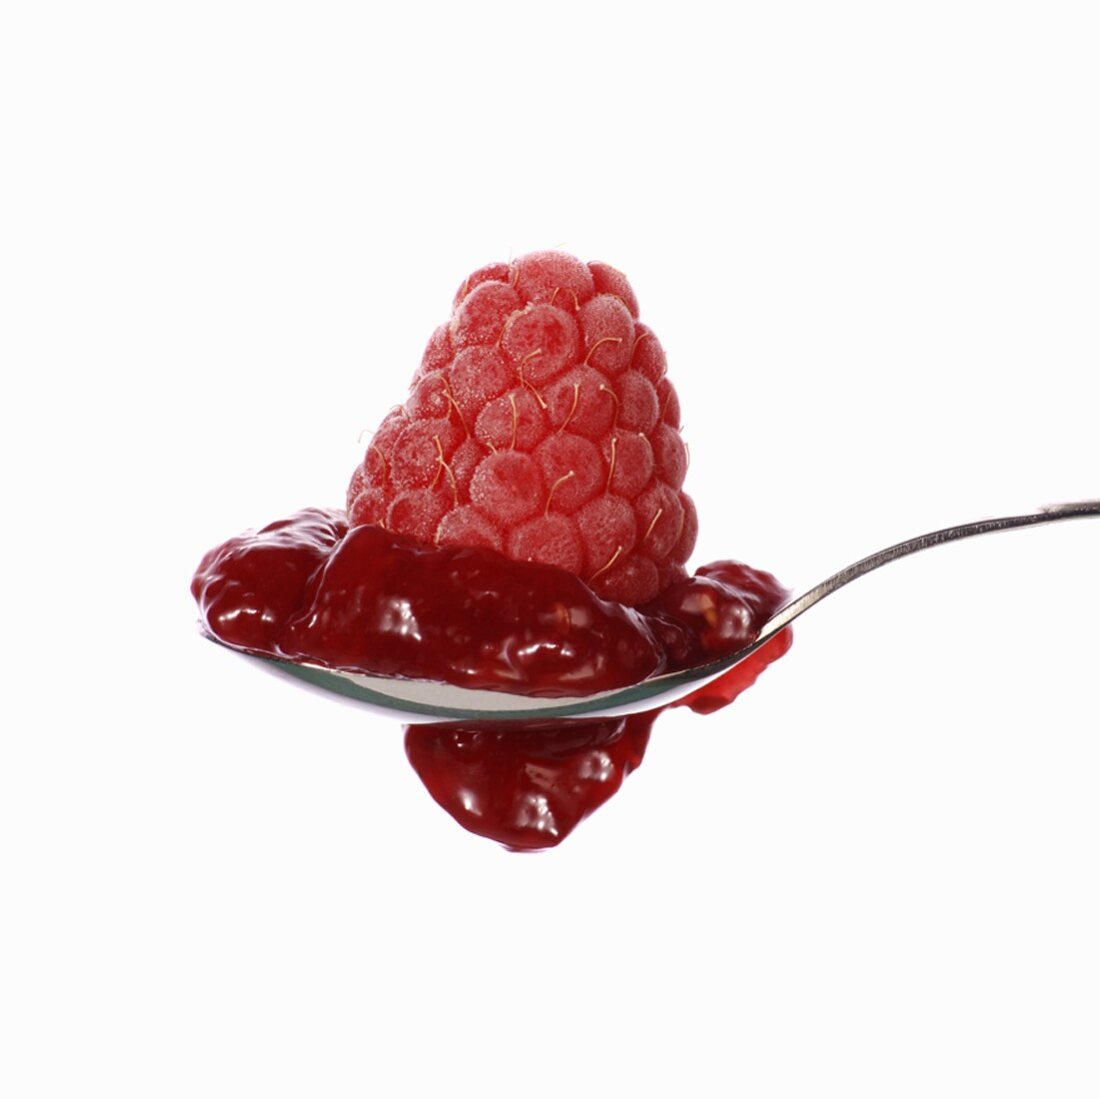 Raspberry jam and raspberry on spoon